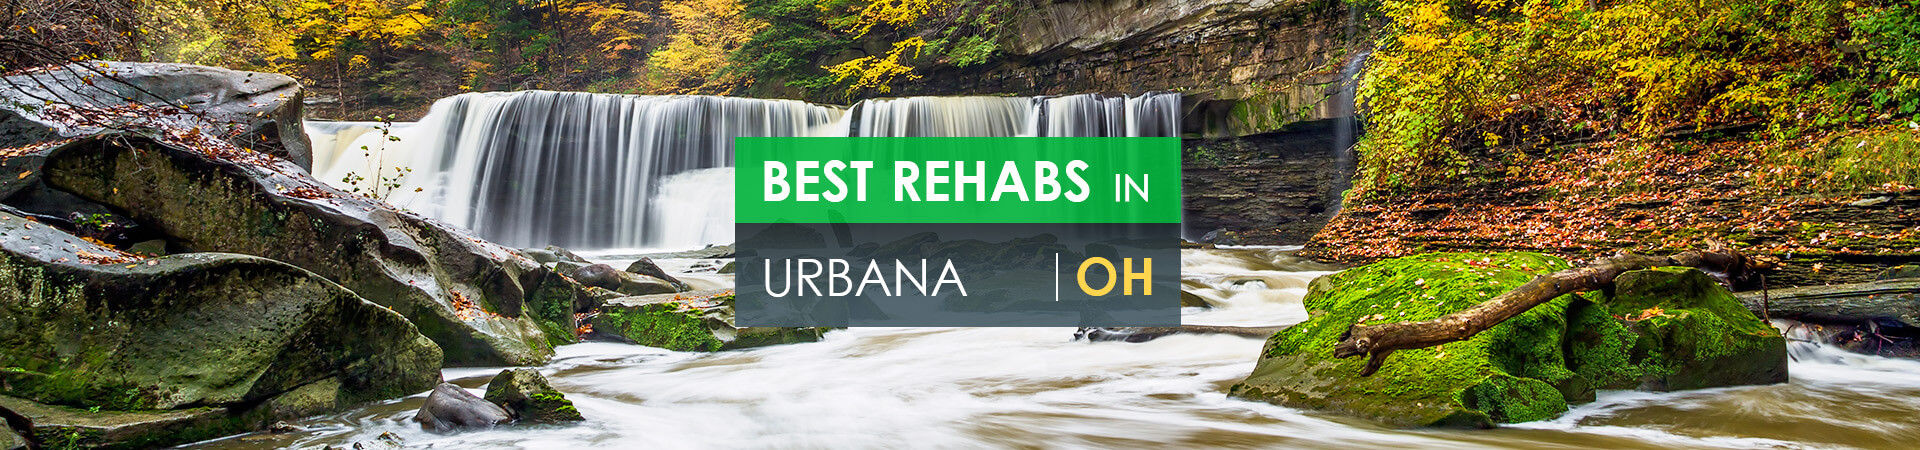 Best rehabs in Urbana, OH